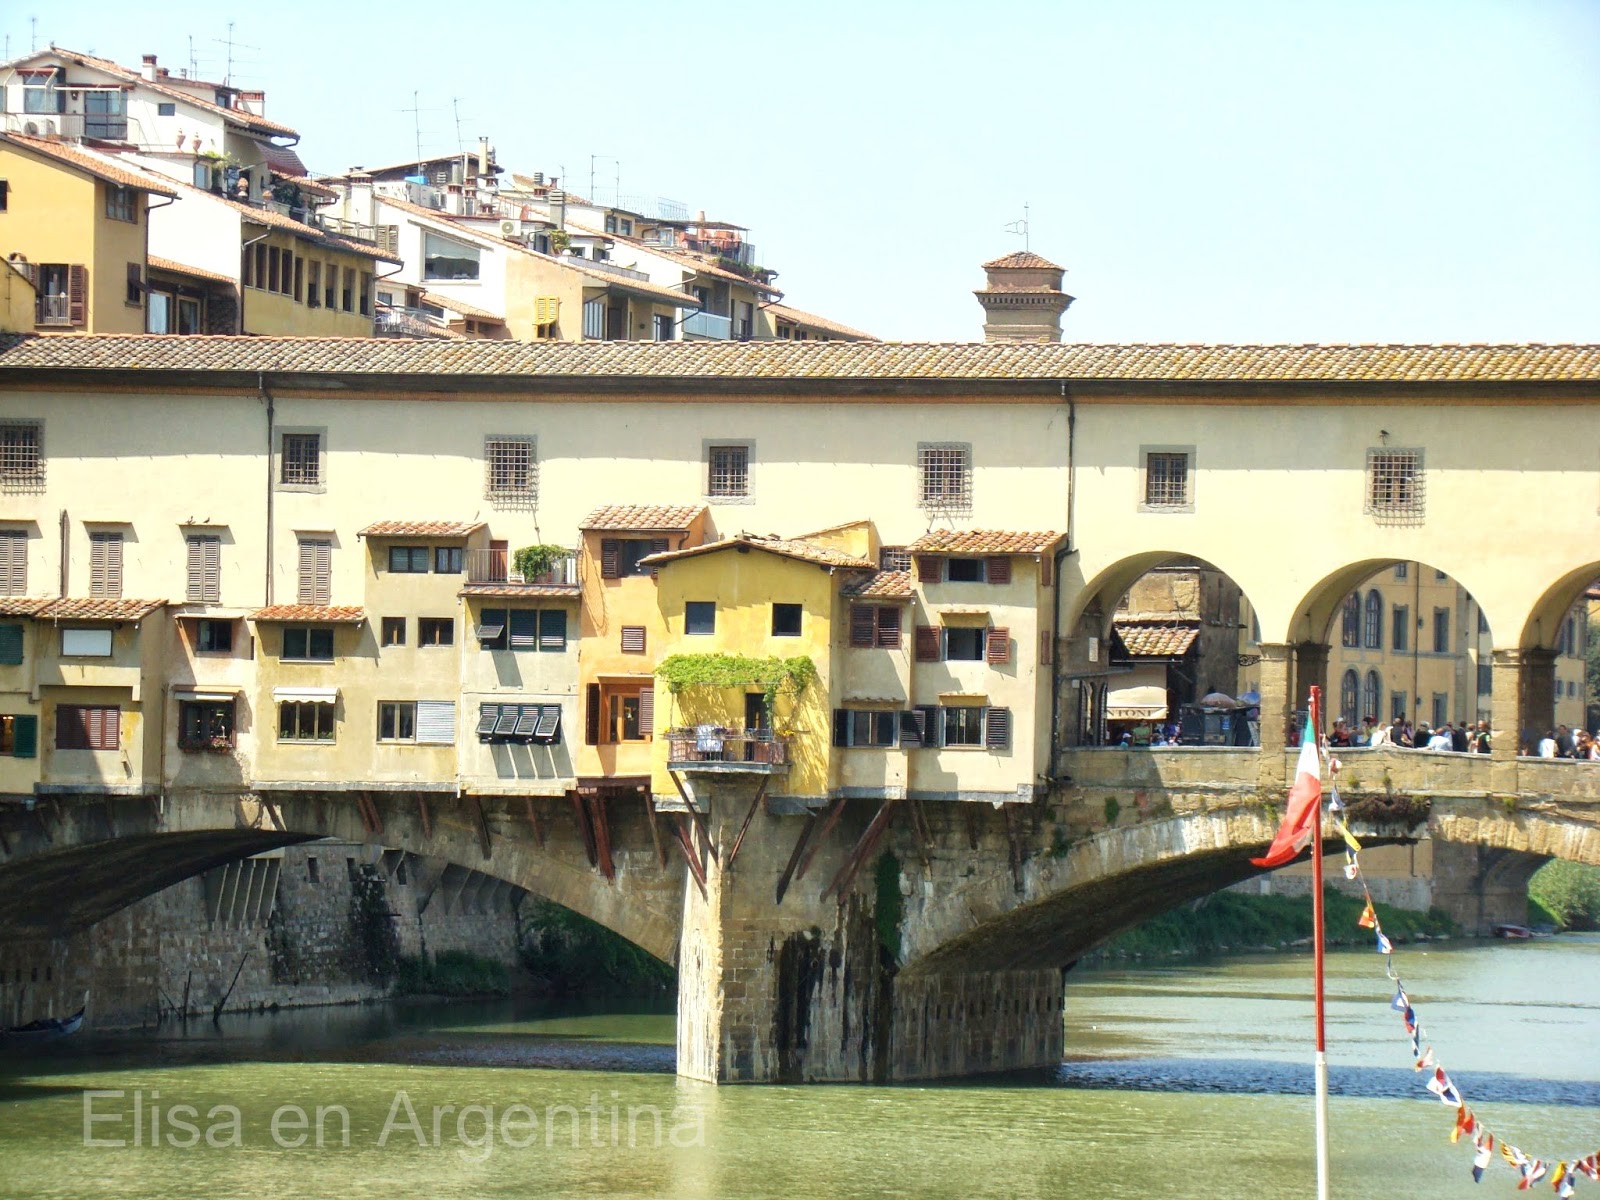 Visita al Oltrarno, Florencia, Firenze, Italia, Elisa N, Blog de Viajes, Lifestyle, Travel